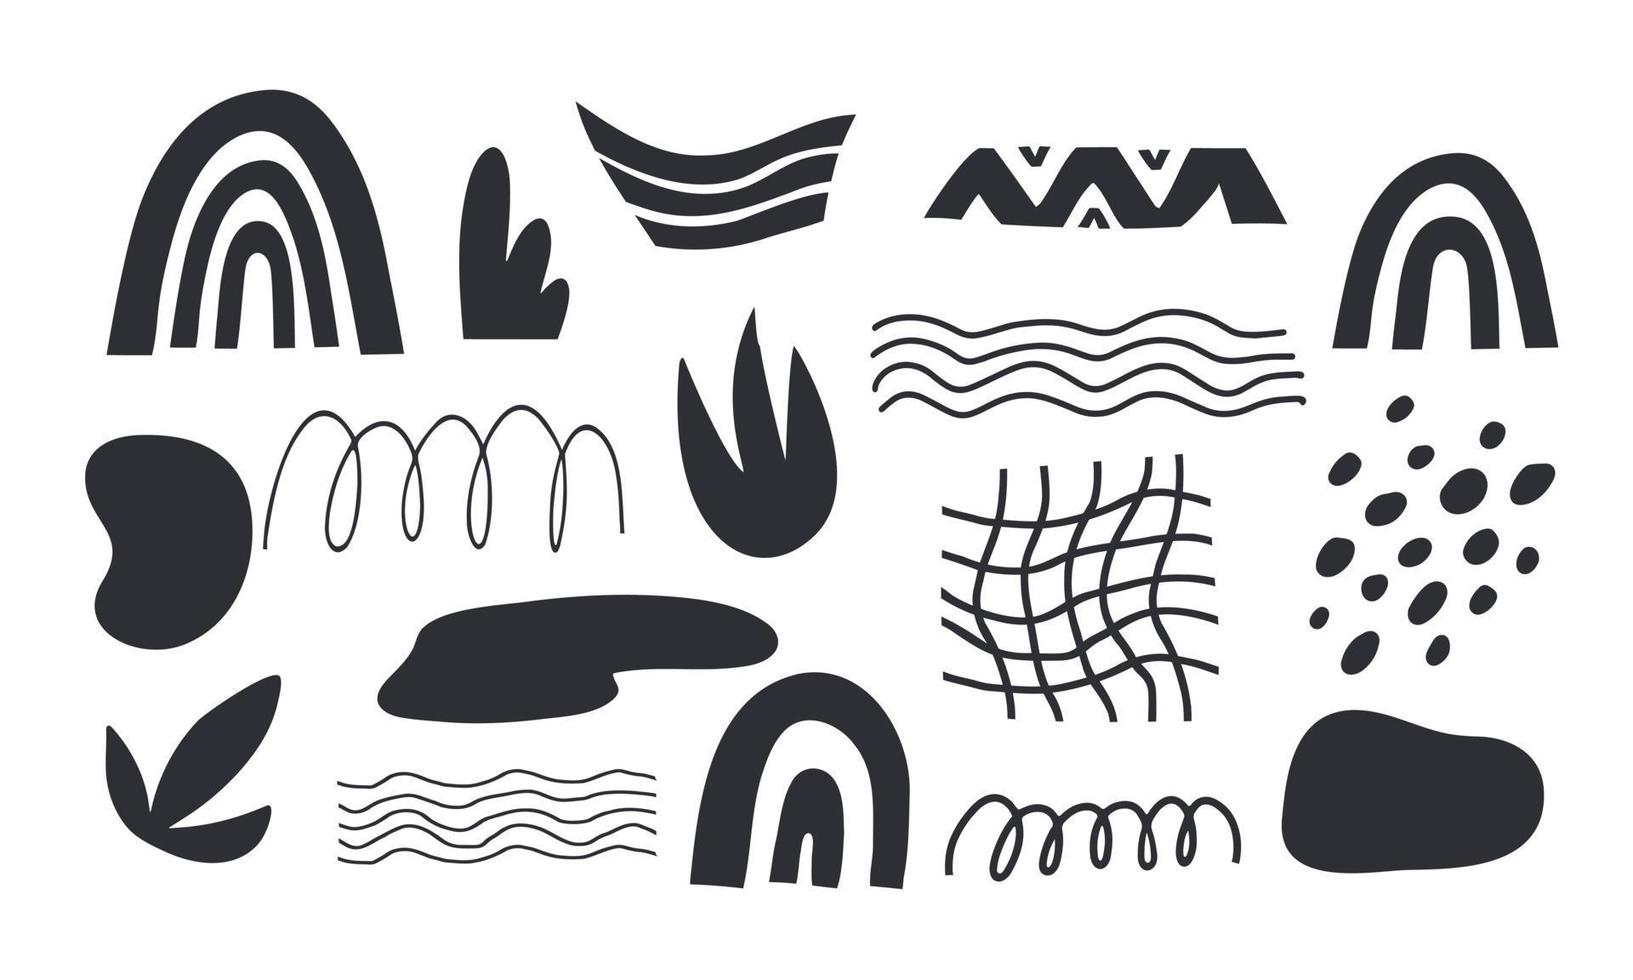 conjunto de formas abstratas pretas e texturas para design em estilo doodle vetor